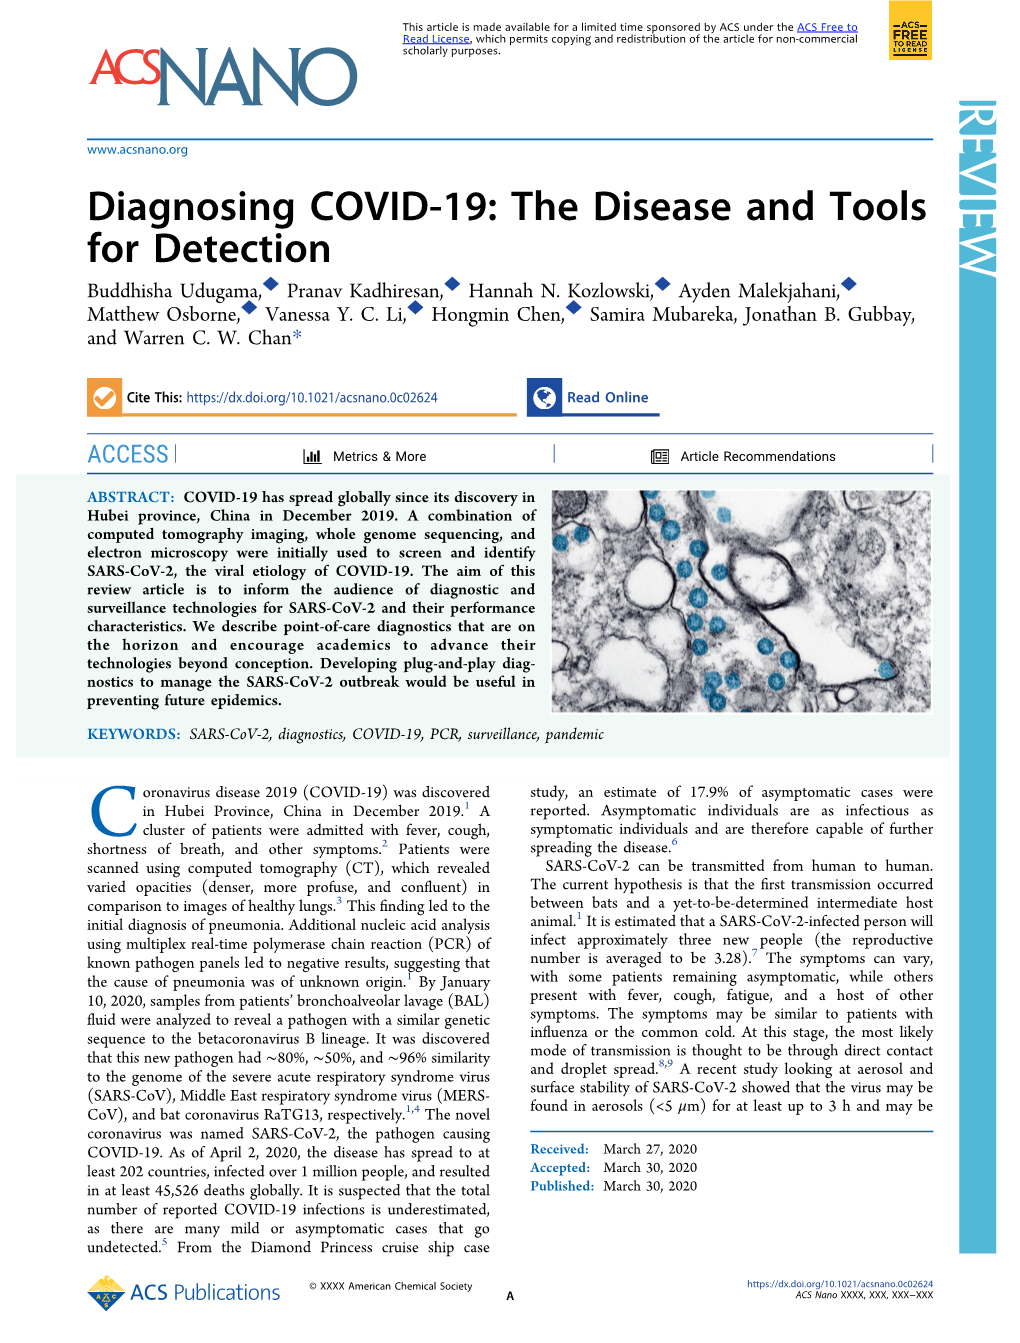 Diagnosing COVID-19: the Disease and Tools for Detection ◆ ◆ ◆ ◆ Buddhisha Udugama, Pranav Kadhiresan, Hannah N